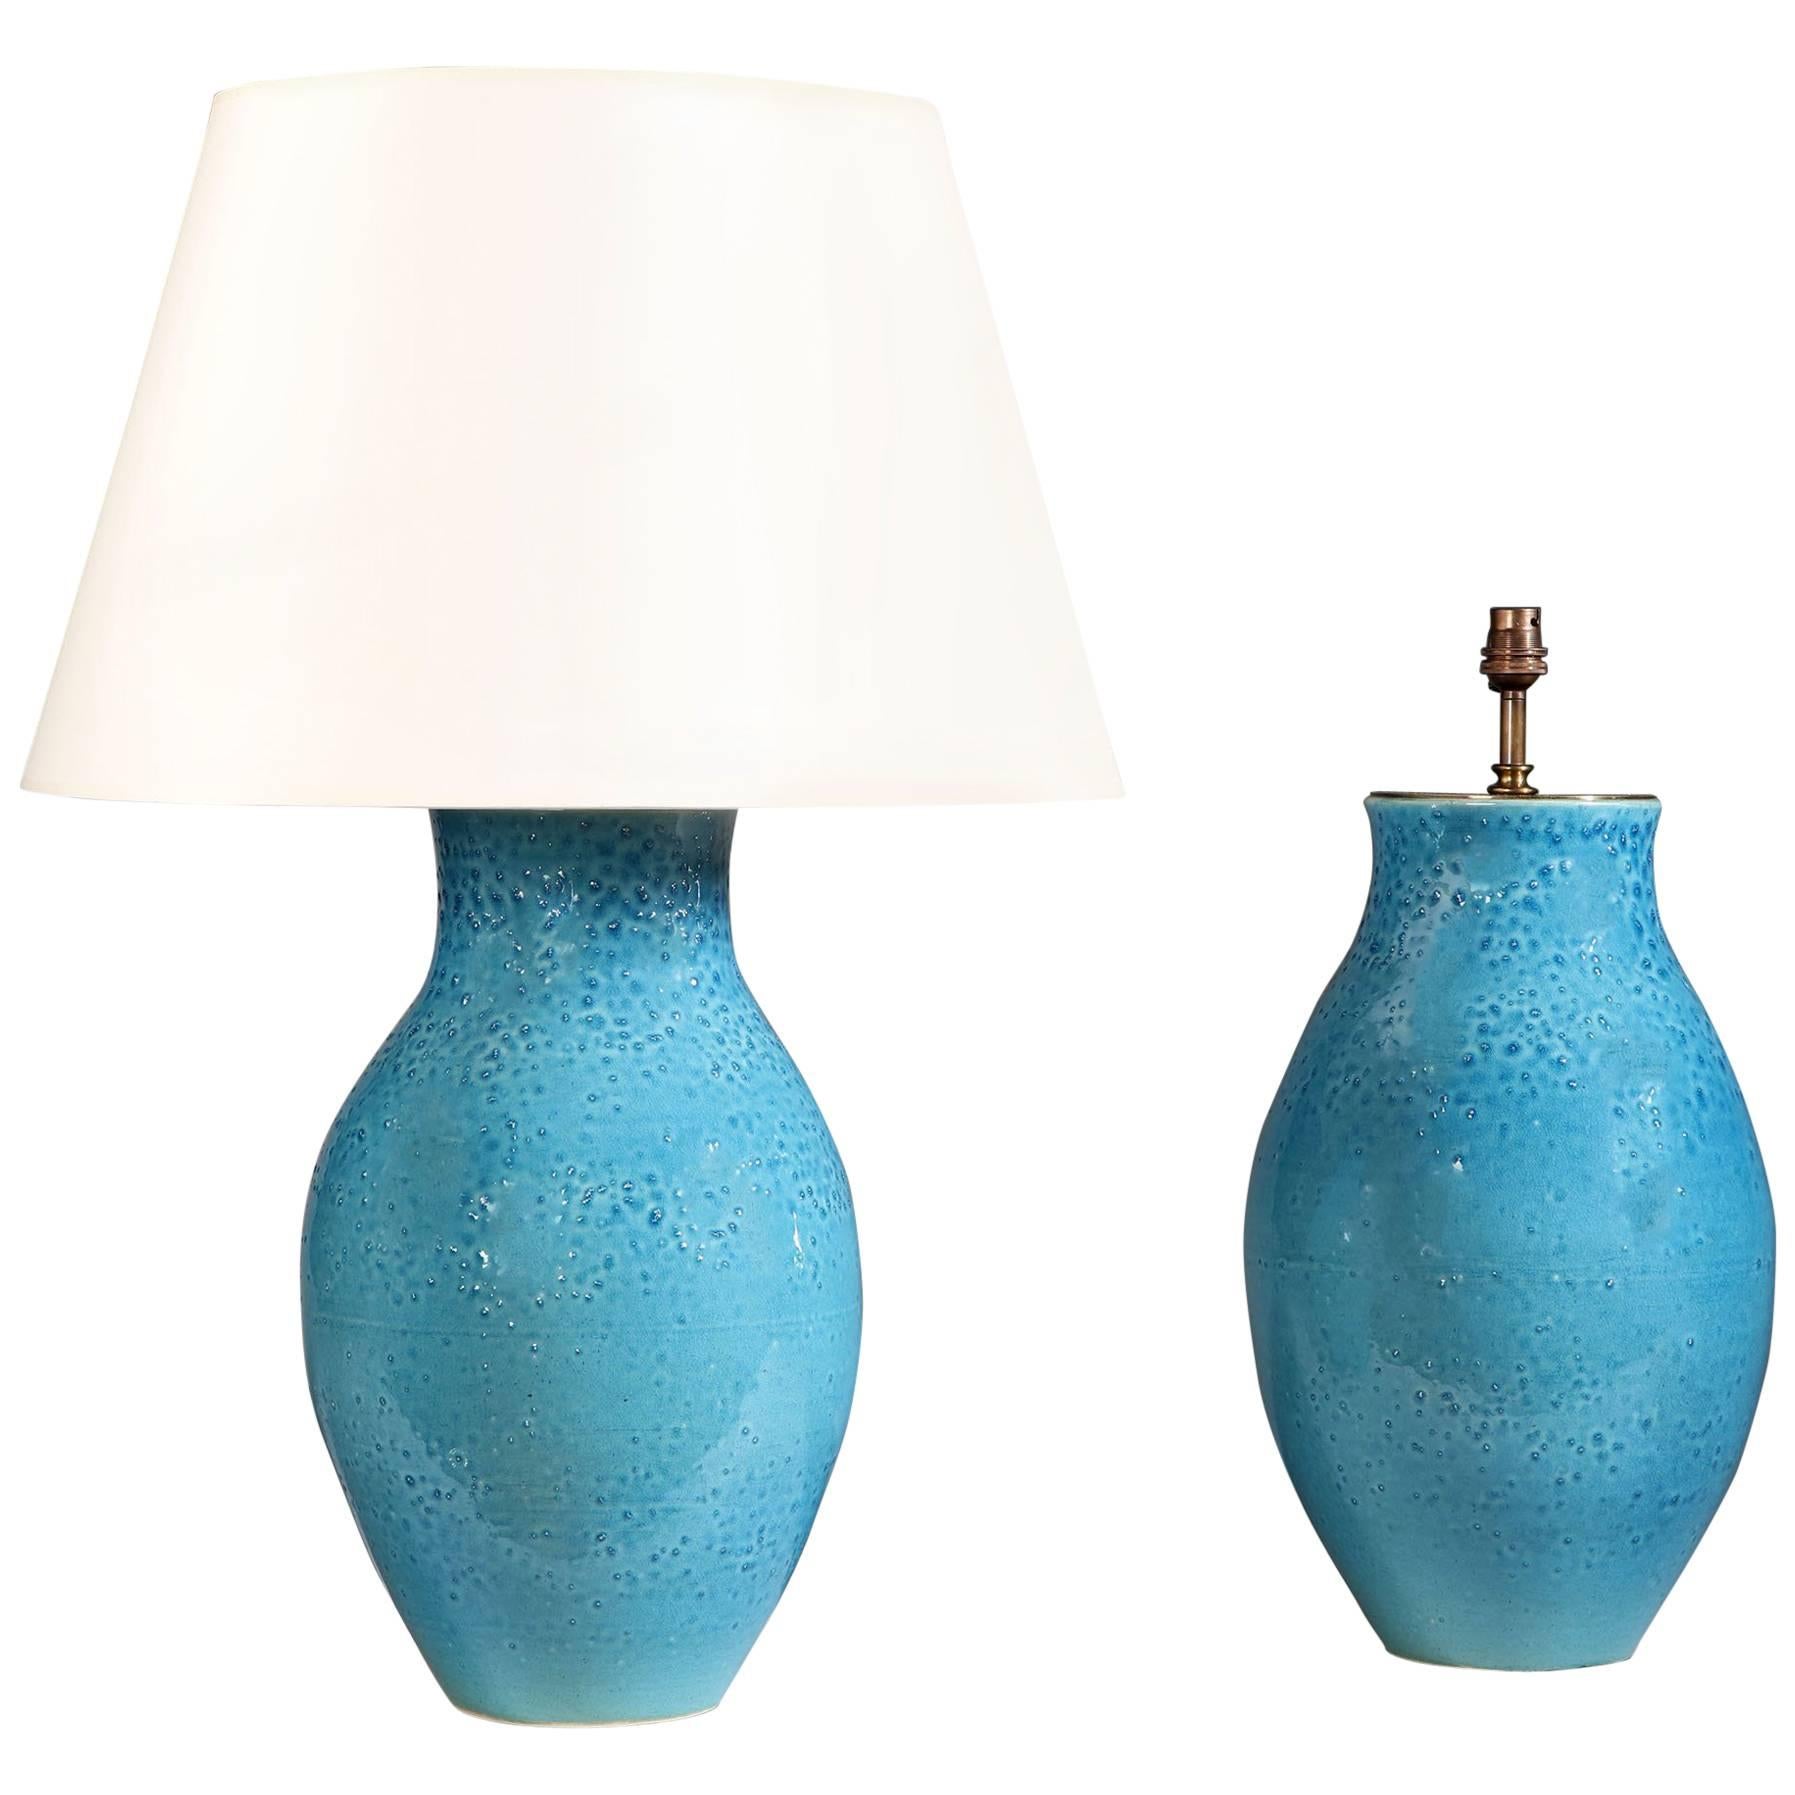 Pair of Blue Glaze Studio Pottery Vases